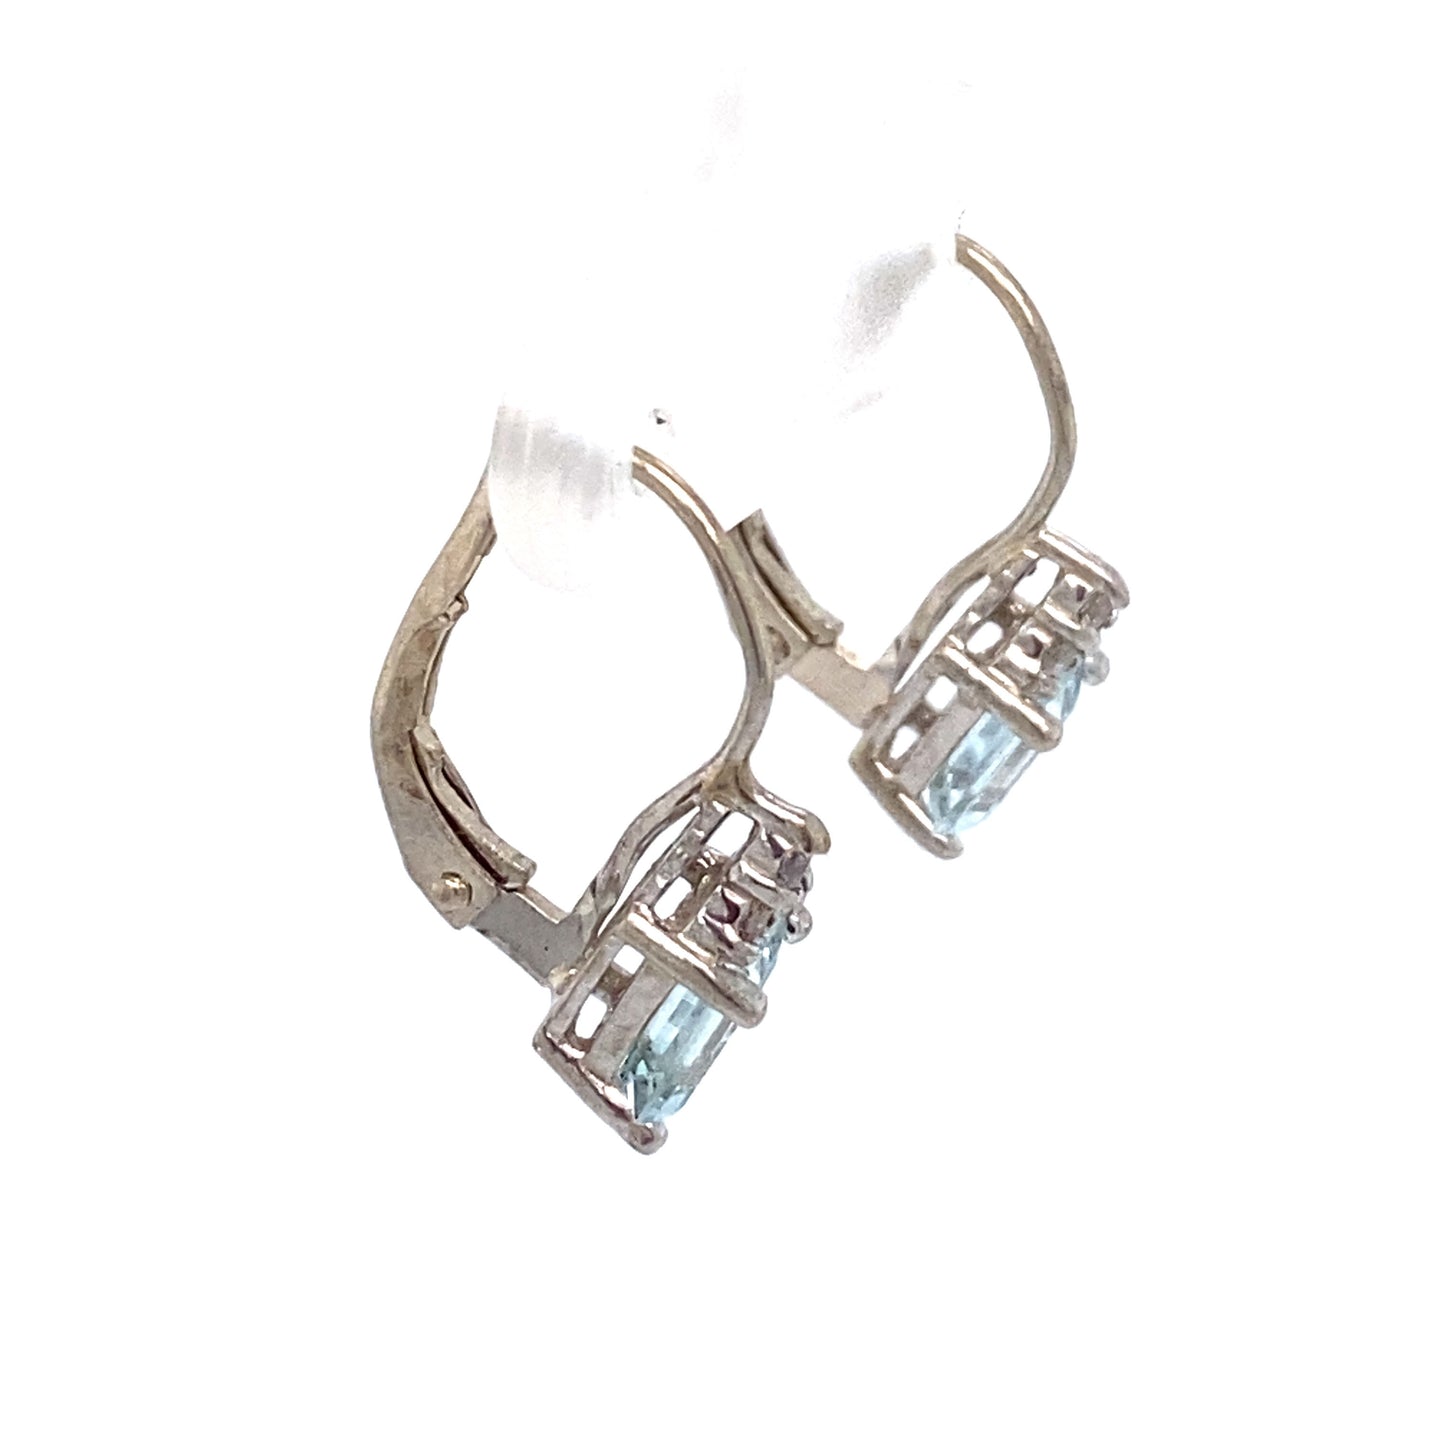 Circa 1950s 1.0 Carat Emerald Cut Aquamarine and Diamond Hoop Earrings in 14K White Gold